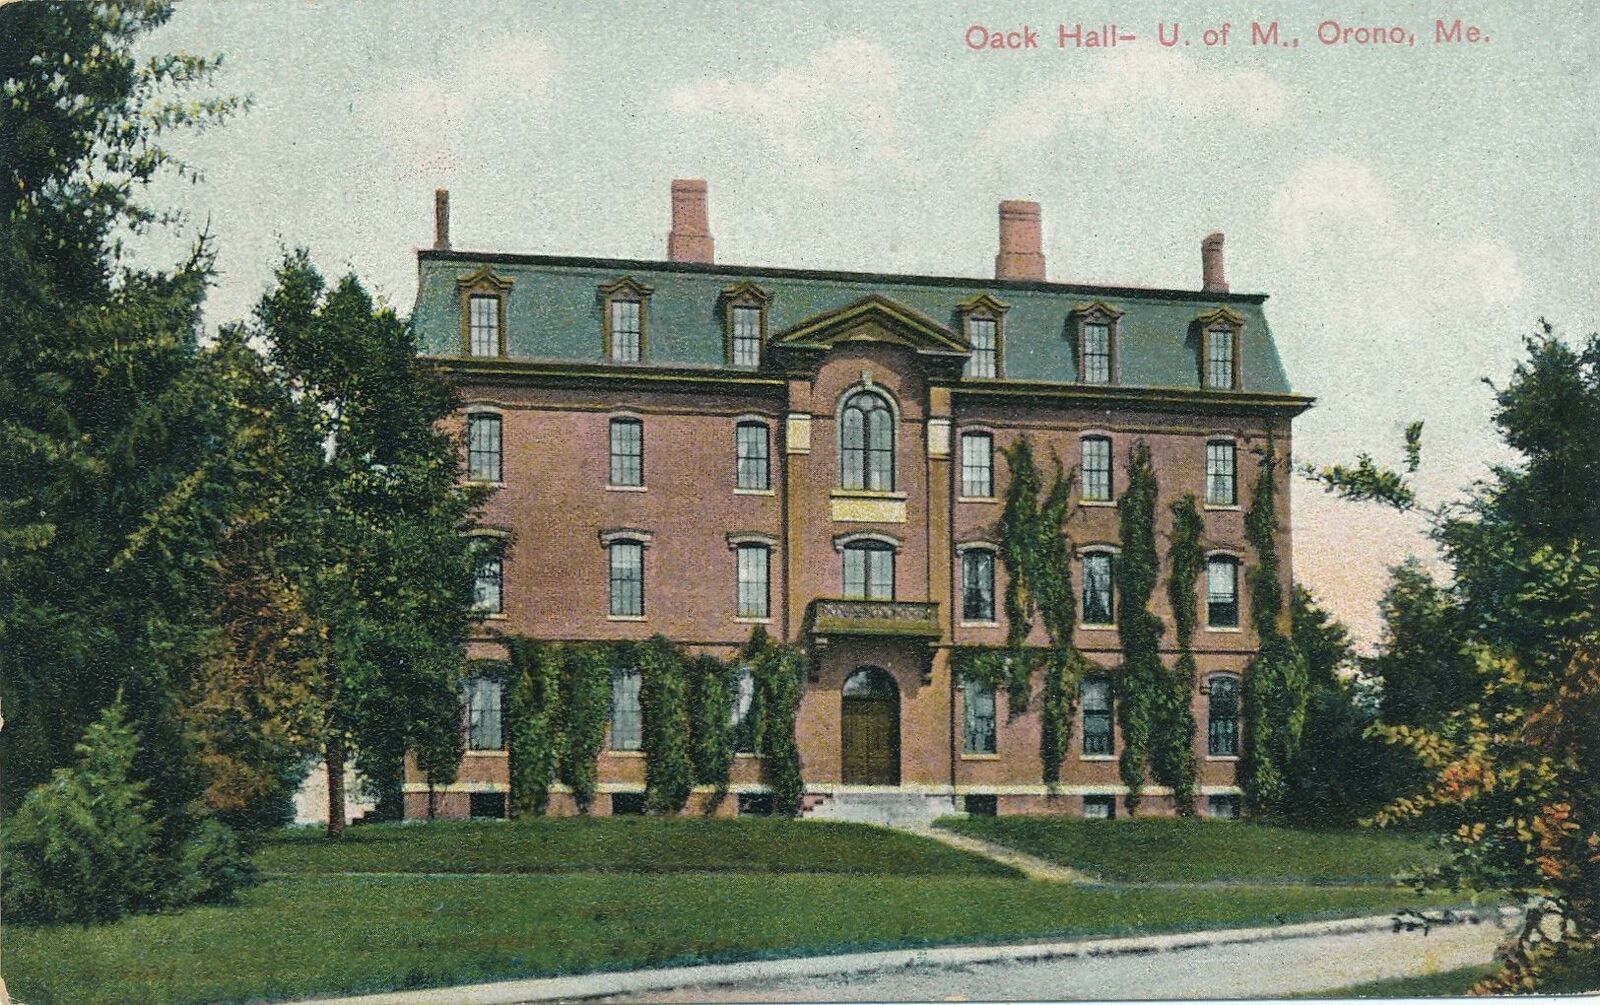 ORONO ME - University of Maine Oack Hall